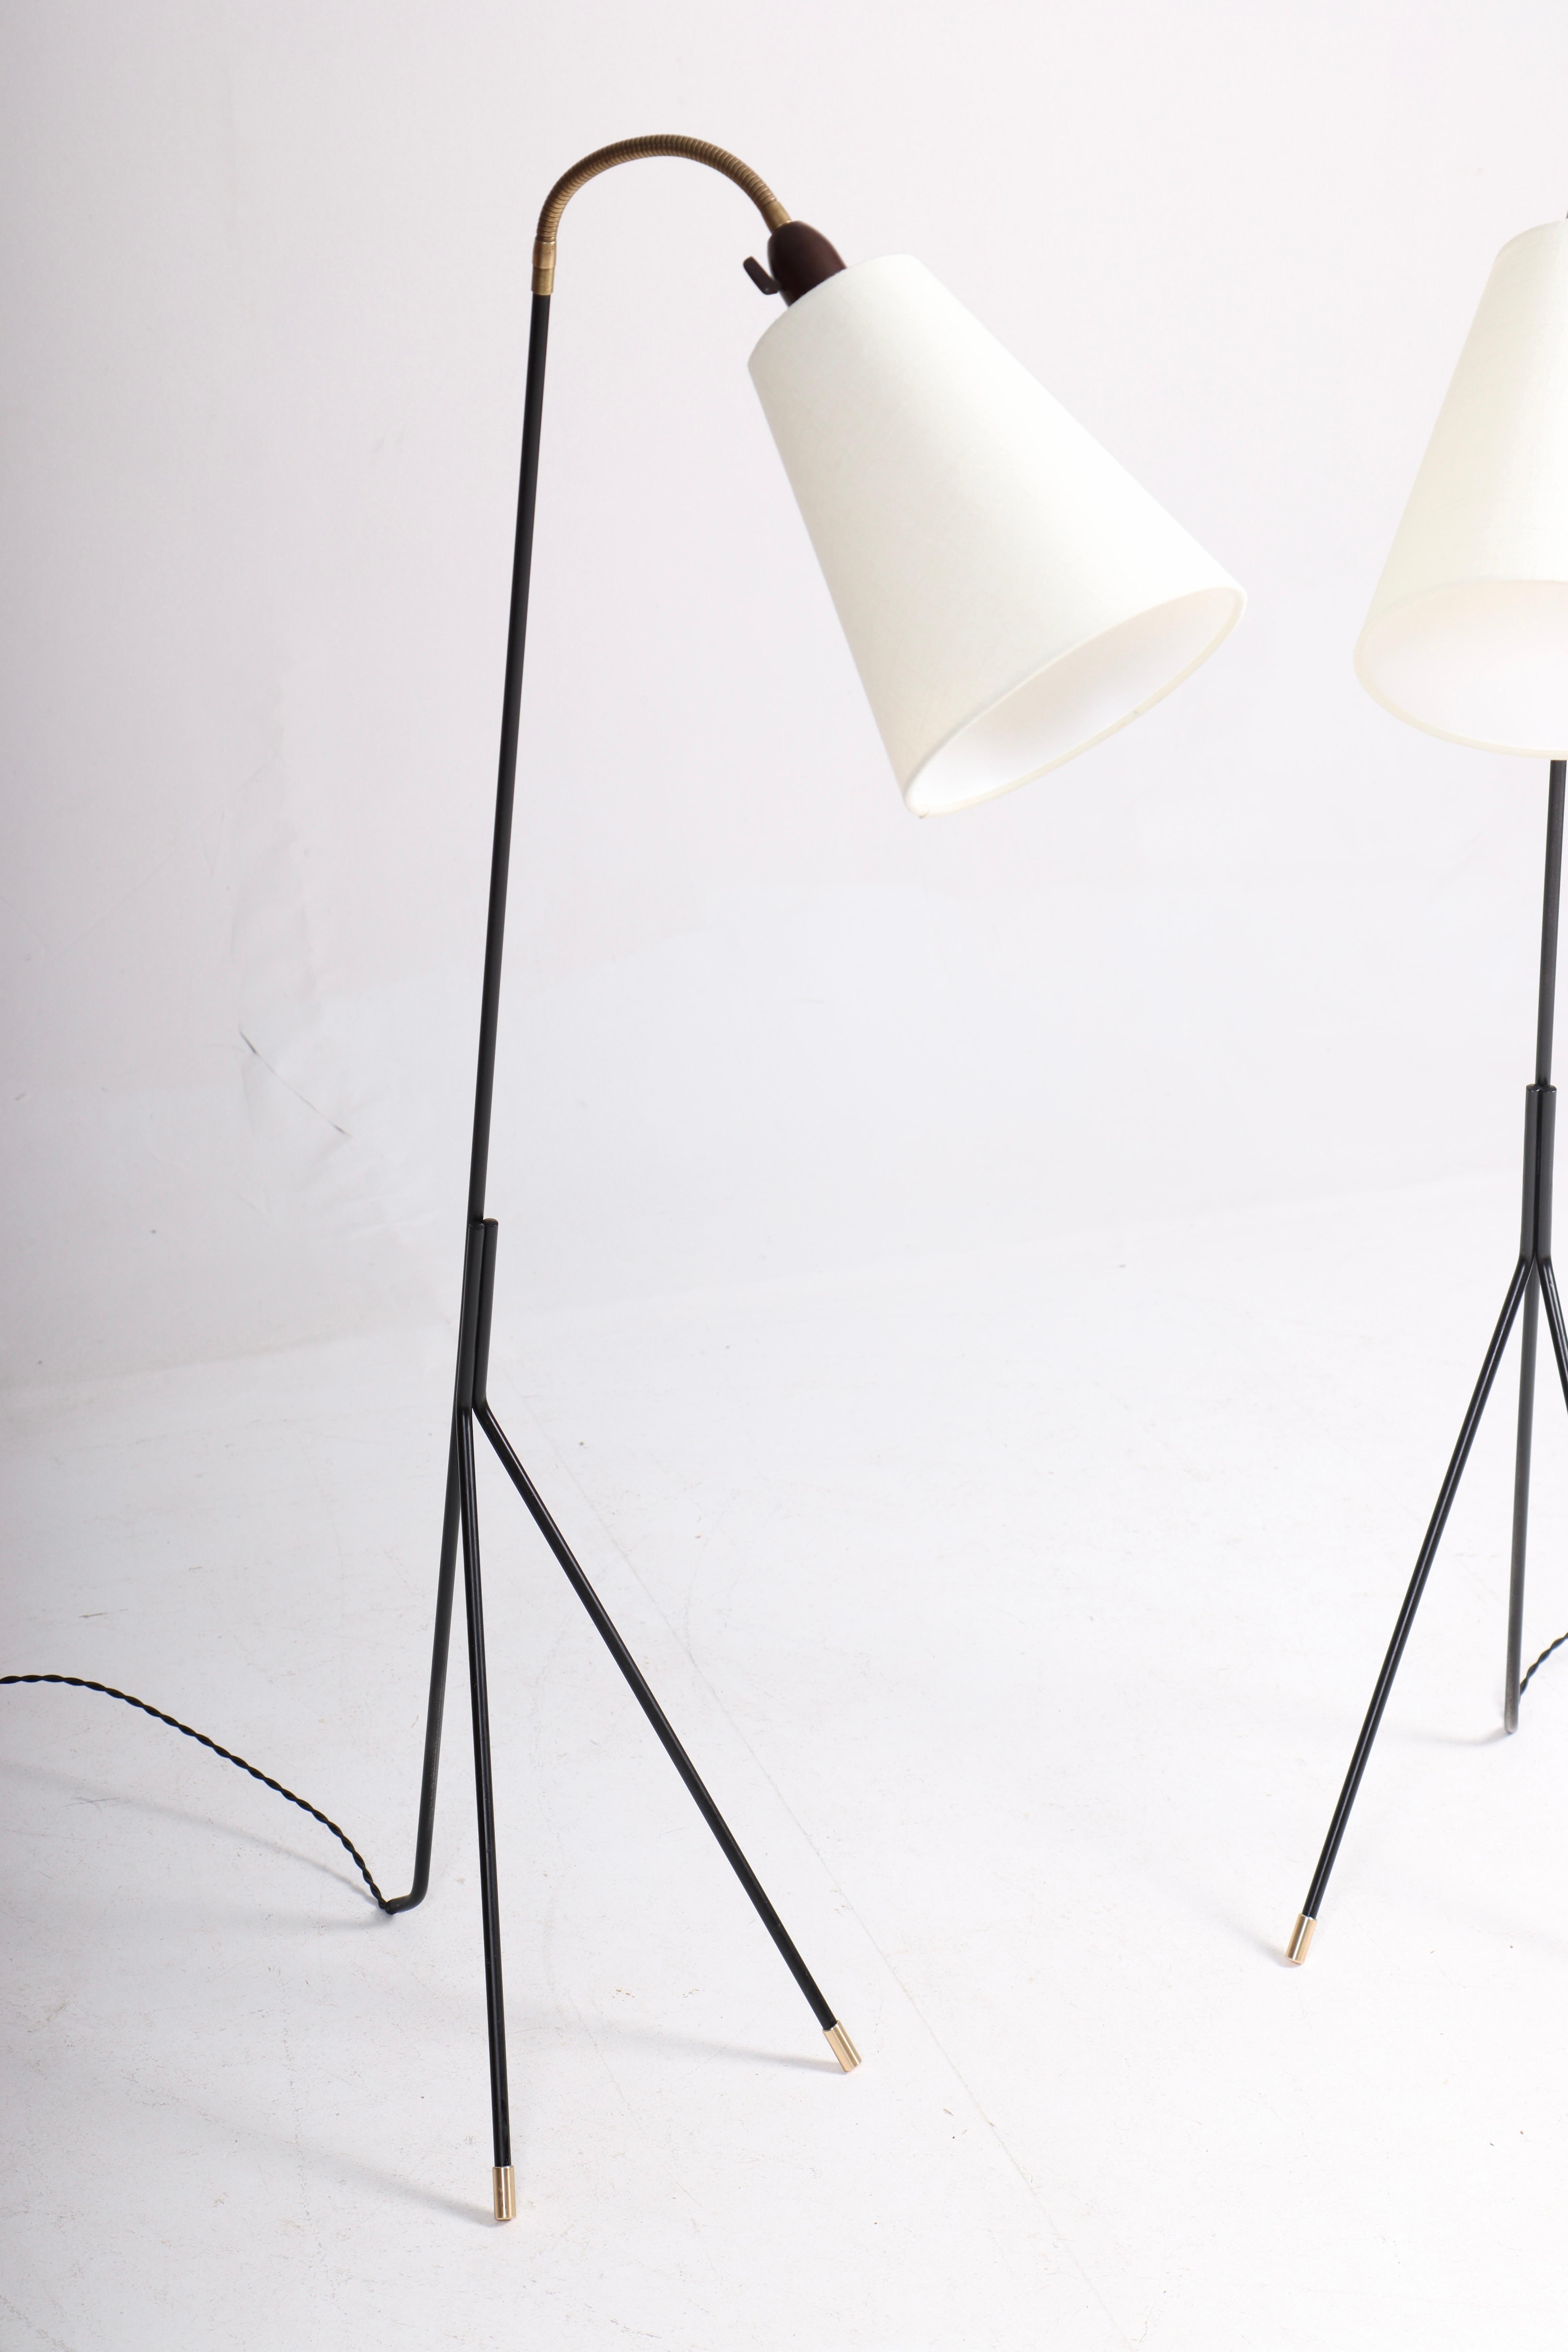 Scandinavian Modern Pair of Midcentury Floor Lamps by Holm Sørensen, Made in Denmark, 1950s For Sale